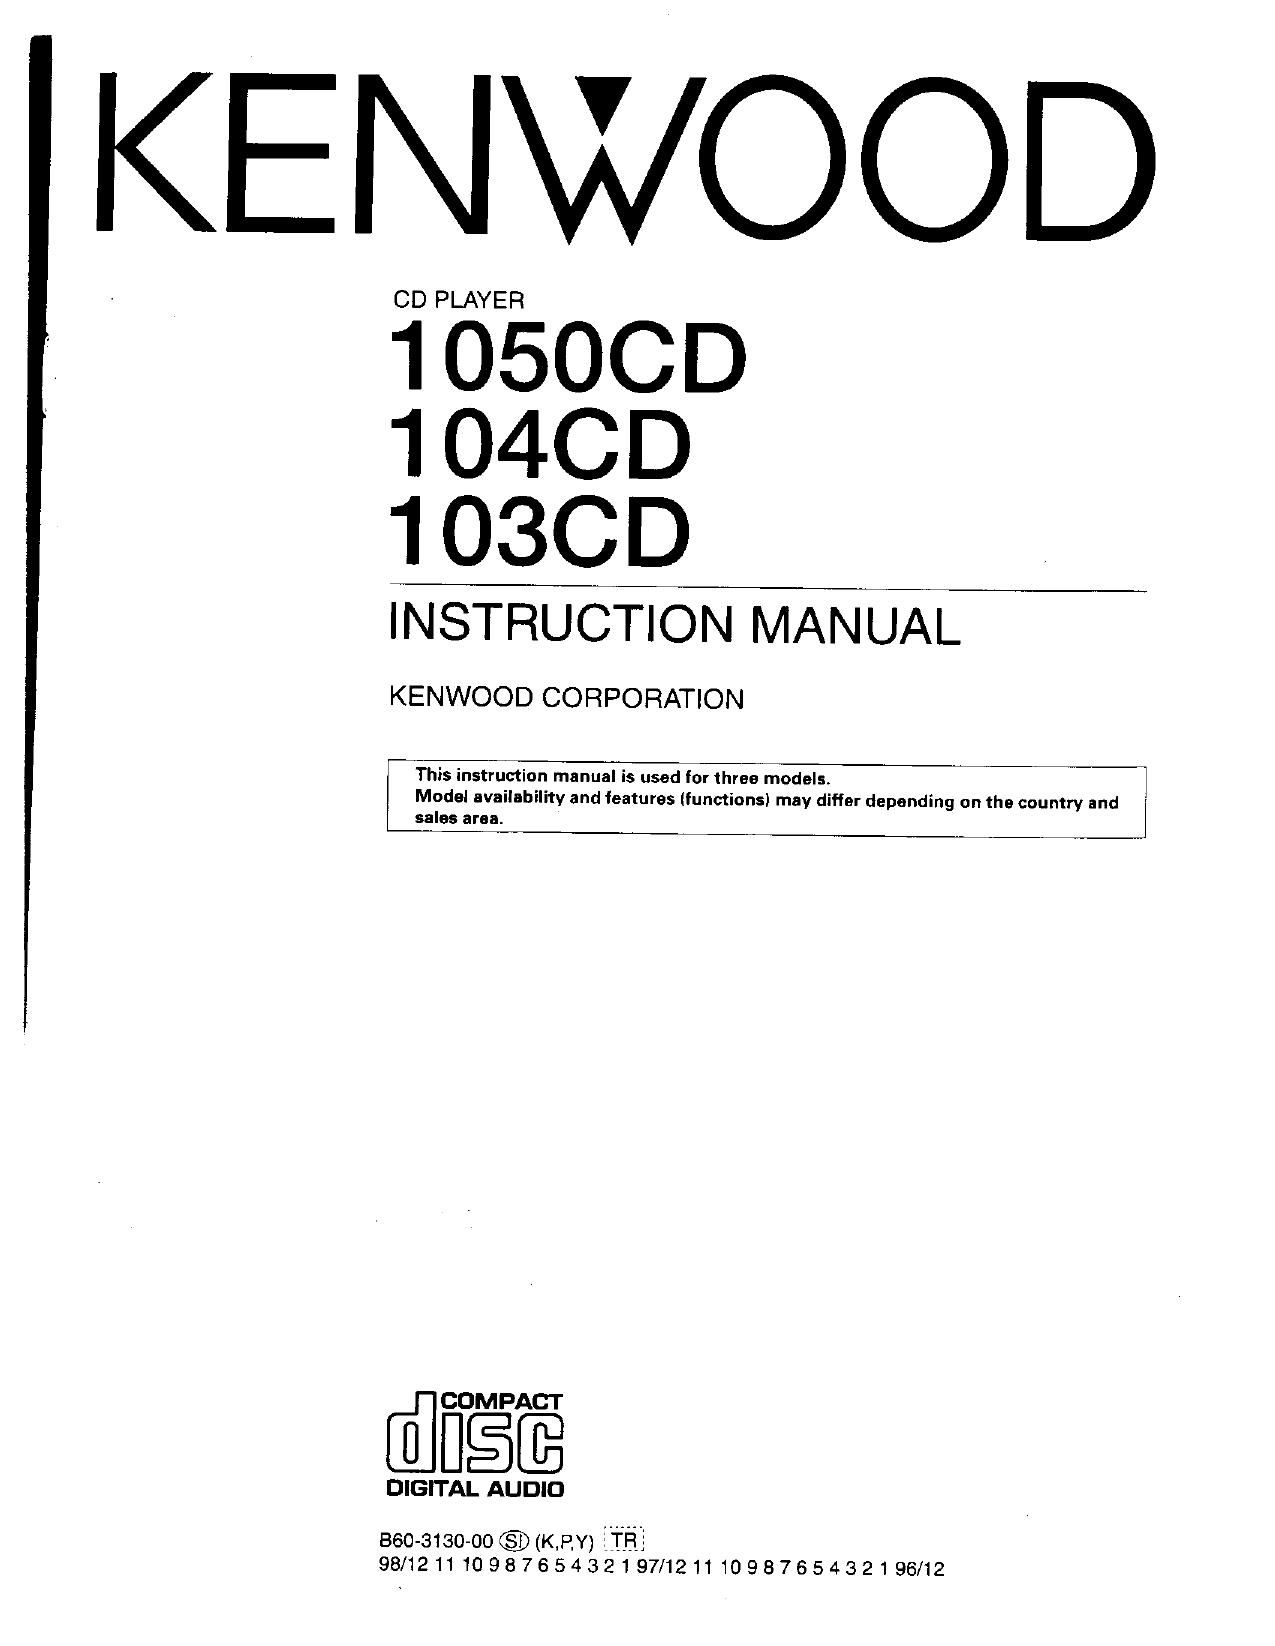 Kenwood 1050 CD Owners Manual